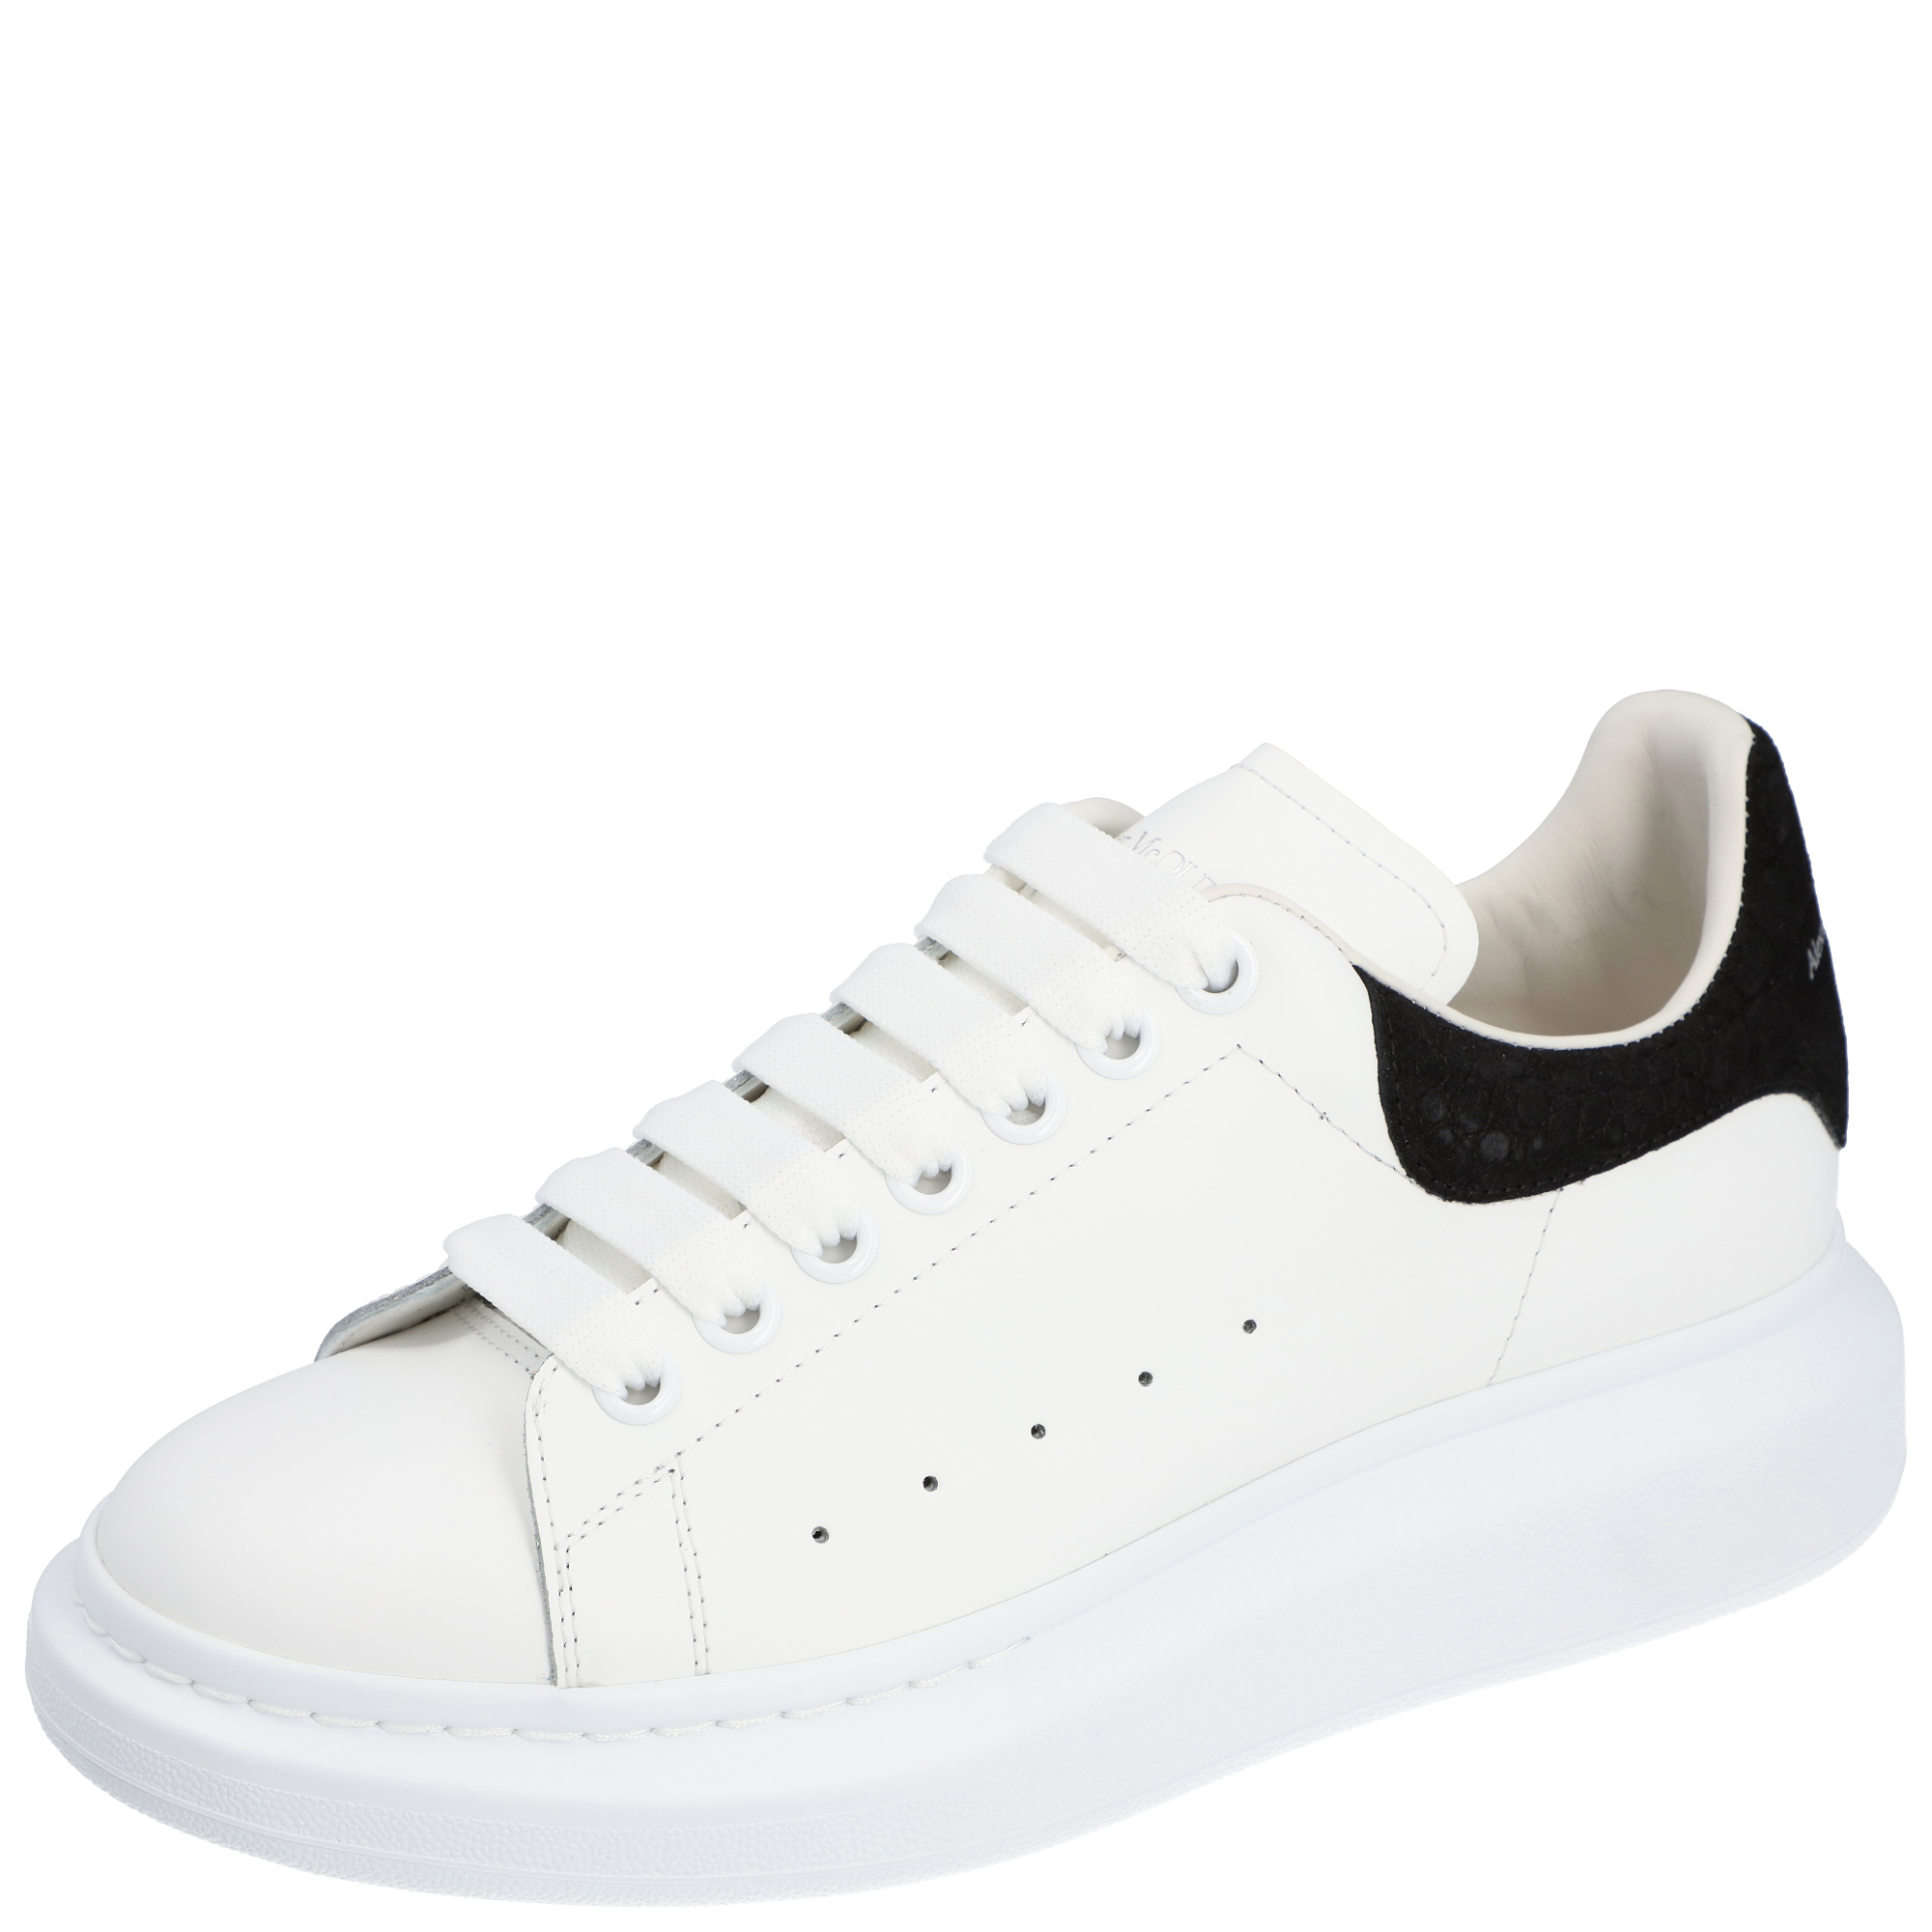 Alexander McQueen White/Black Leather Oversized Sneakers EU 41.5